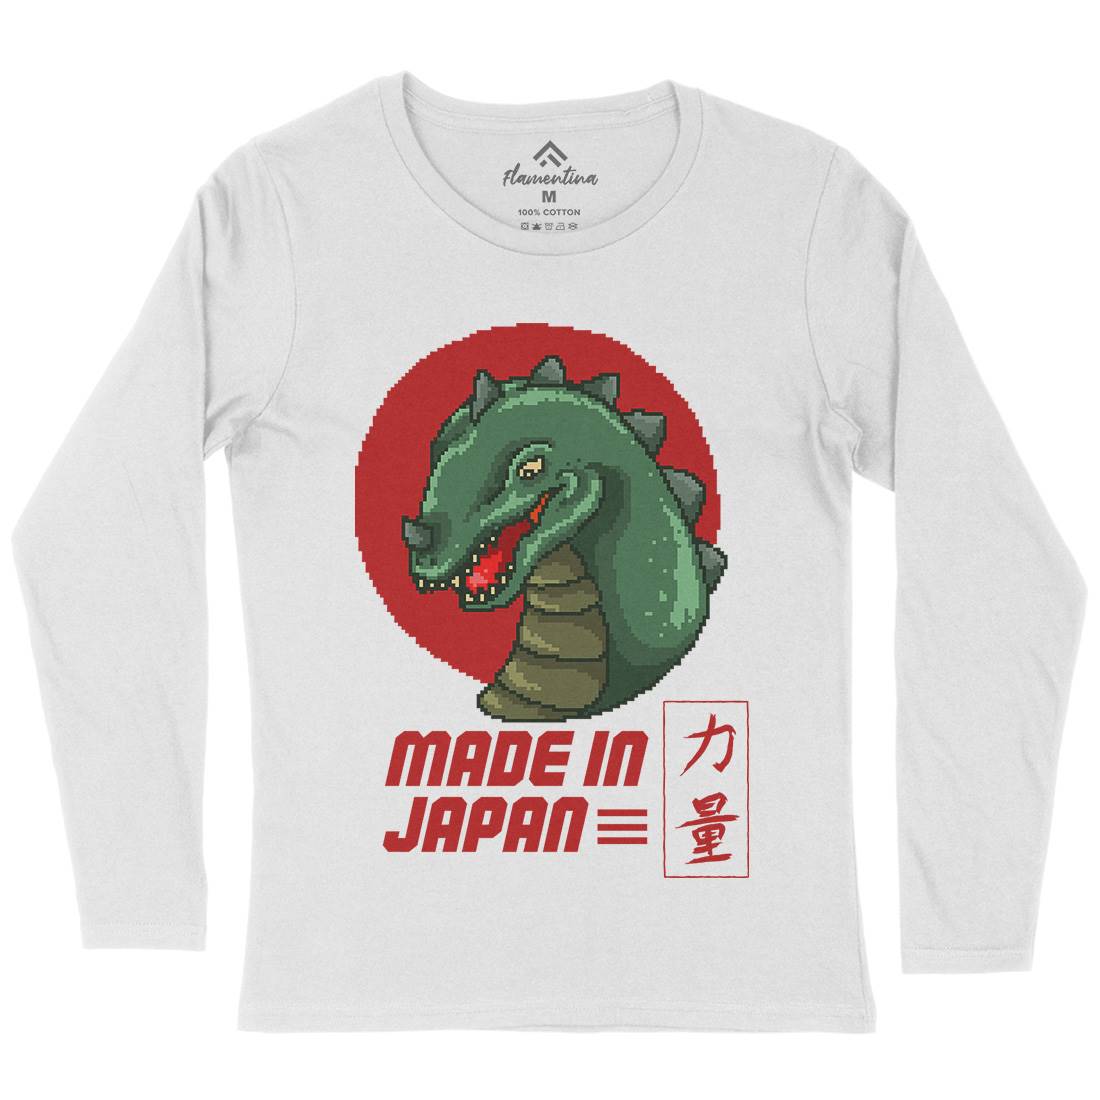 Made In Japan Womens Long Sleeve T-Shirt Horror B928